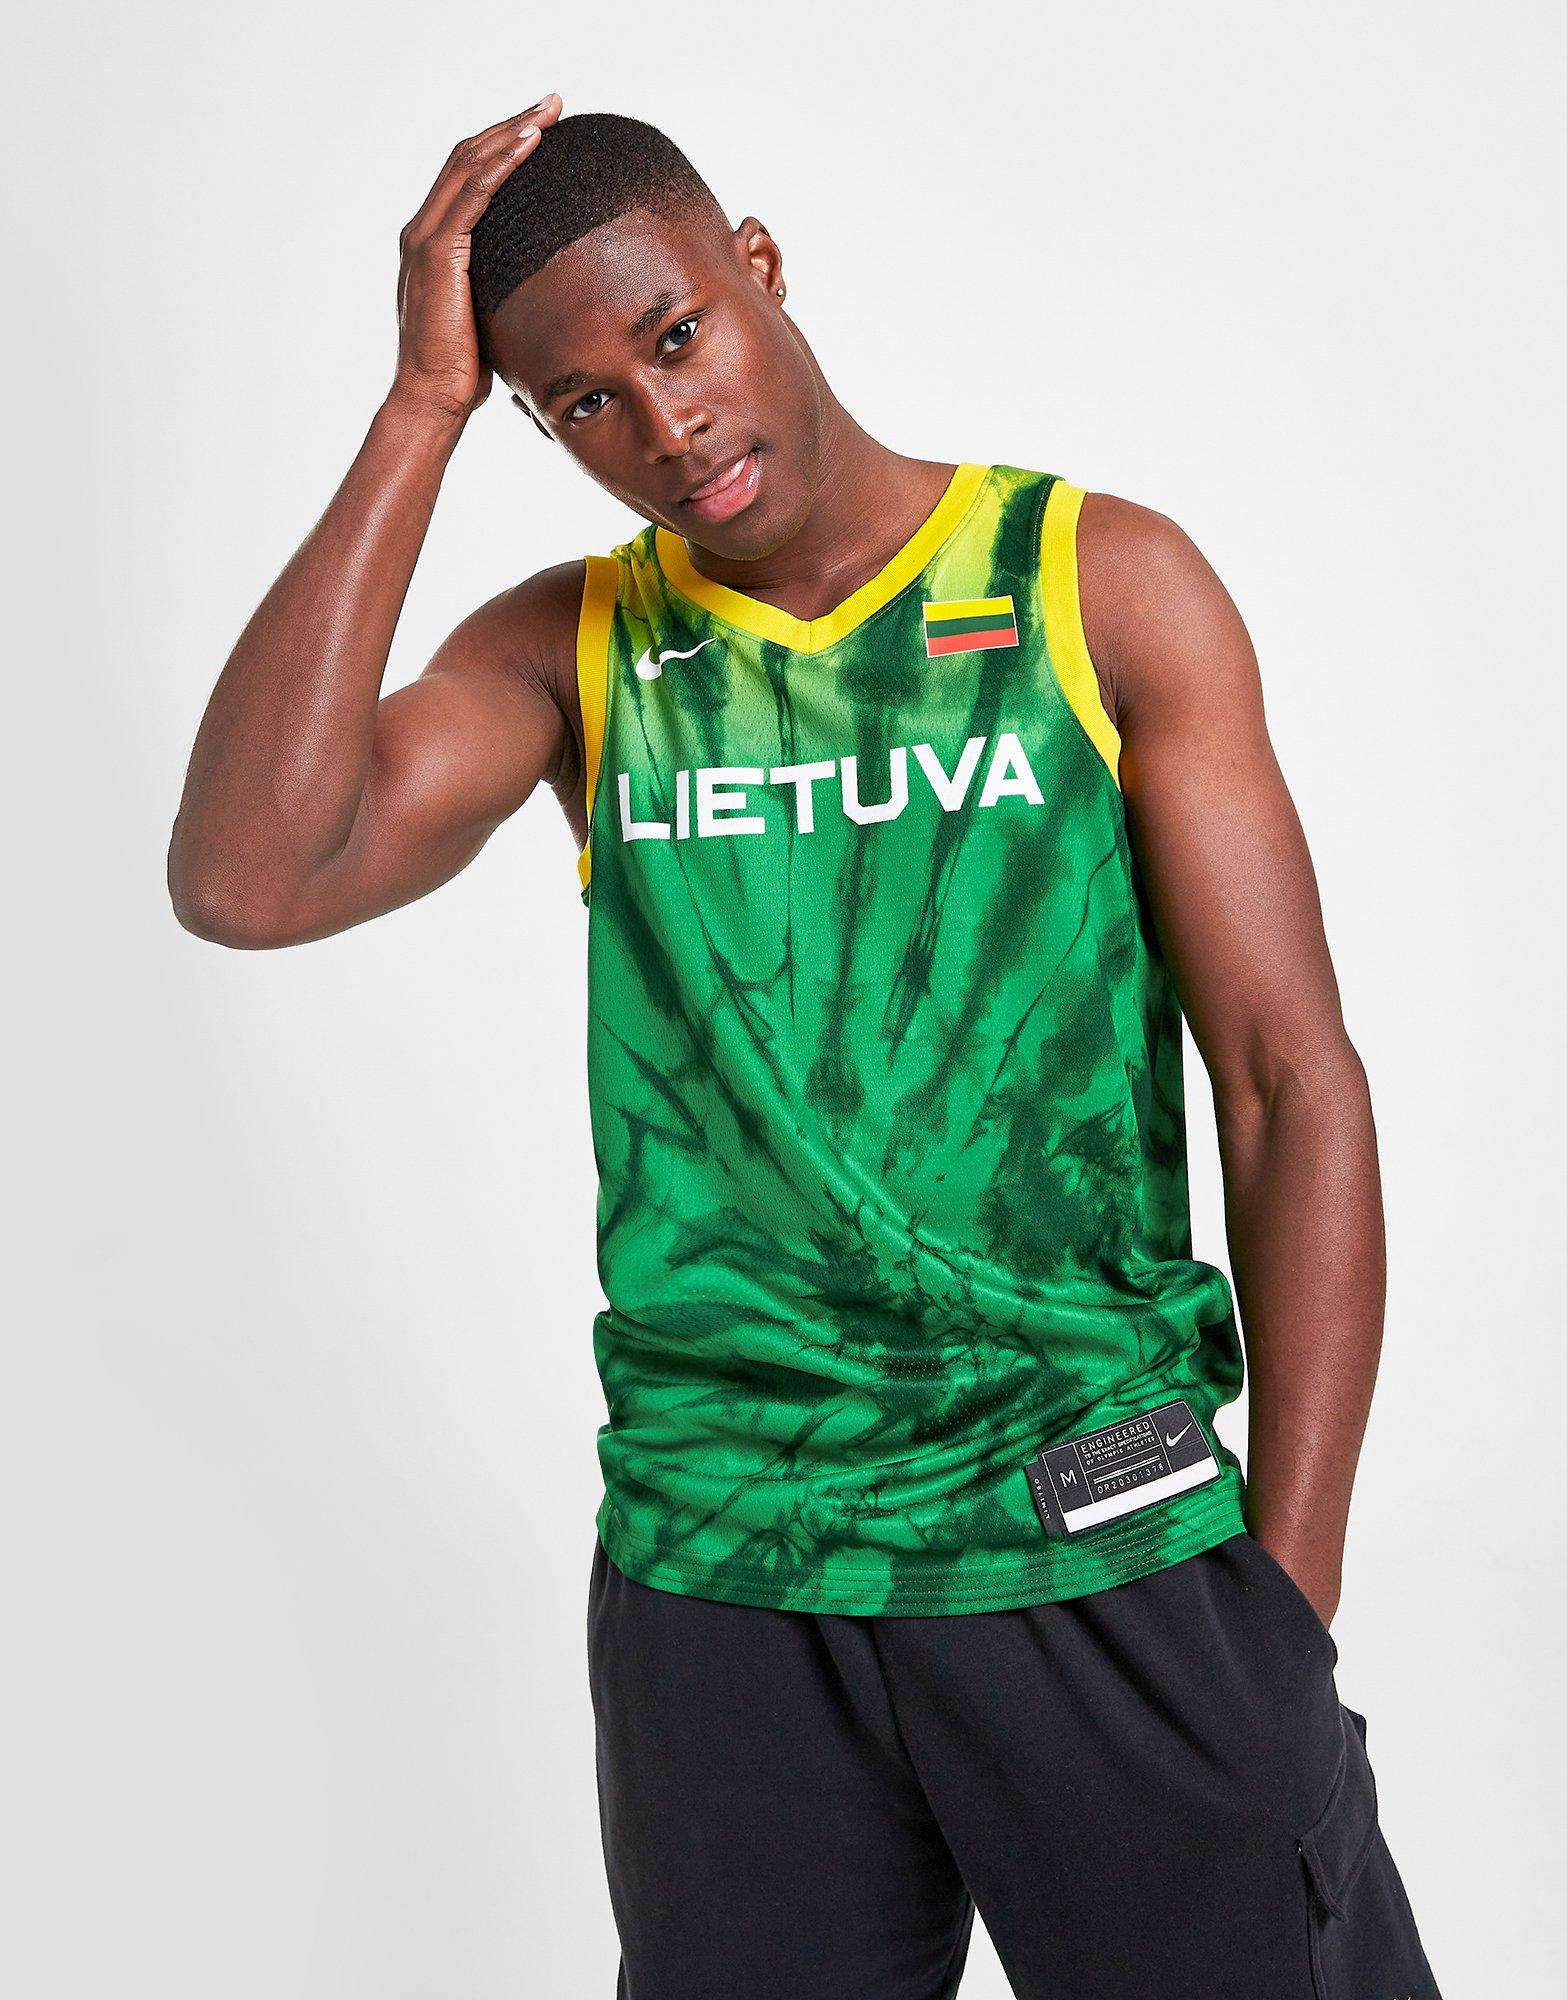 Nike Lithuania Lietuva Green Basketball Jersey Medium M